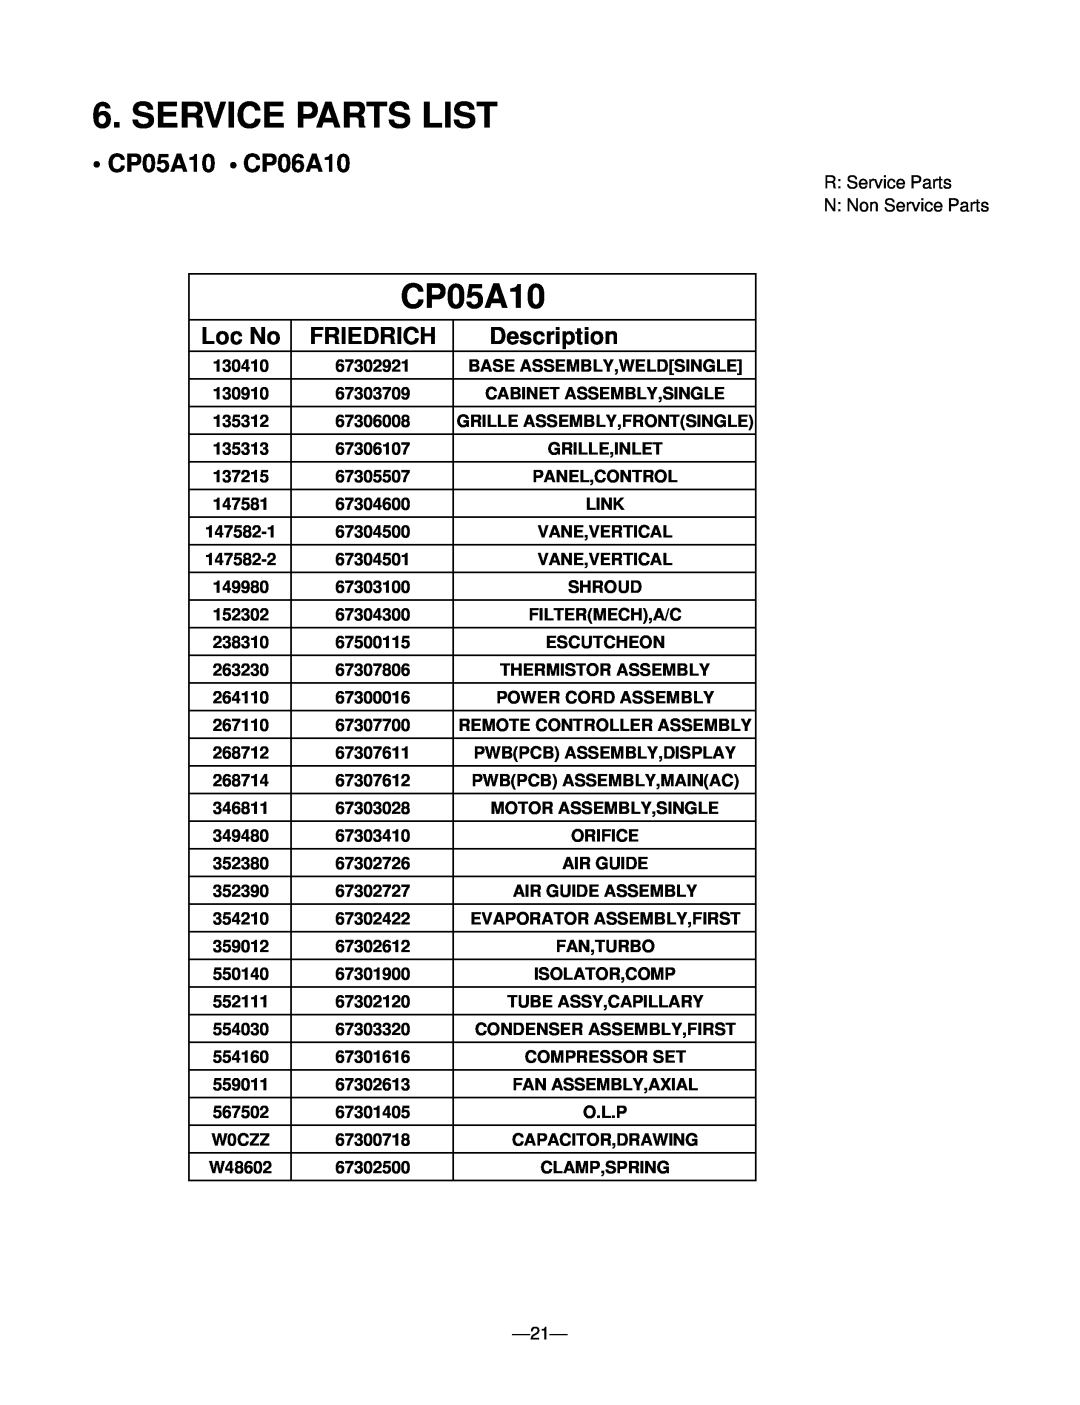 Friedrich manual Service Parts List, CP05A10 CP06A10, Loc No, Friedrich, Description 